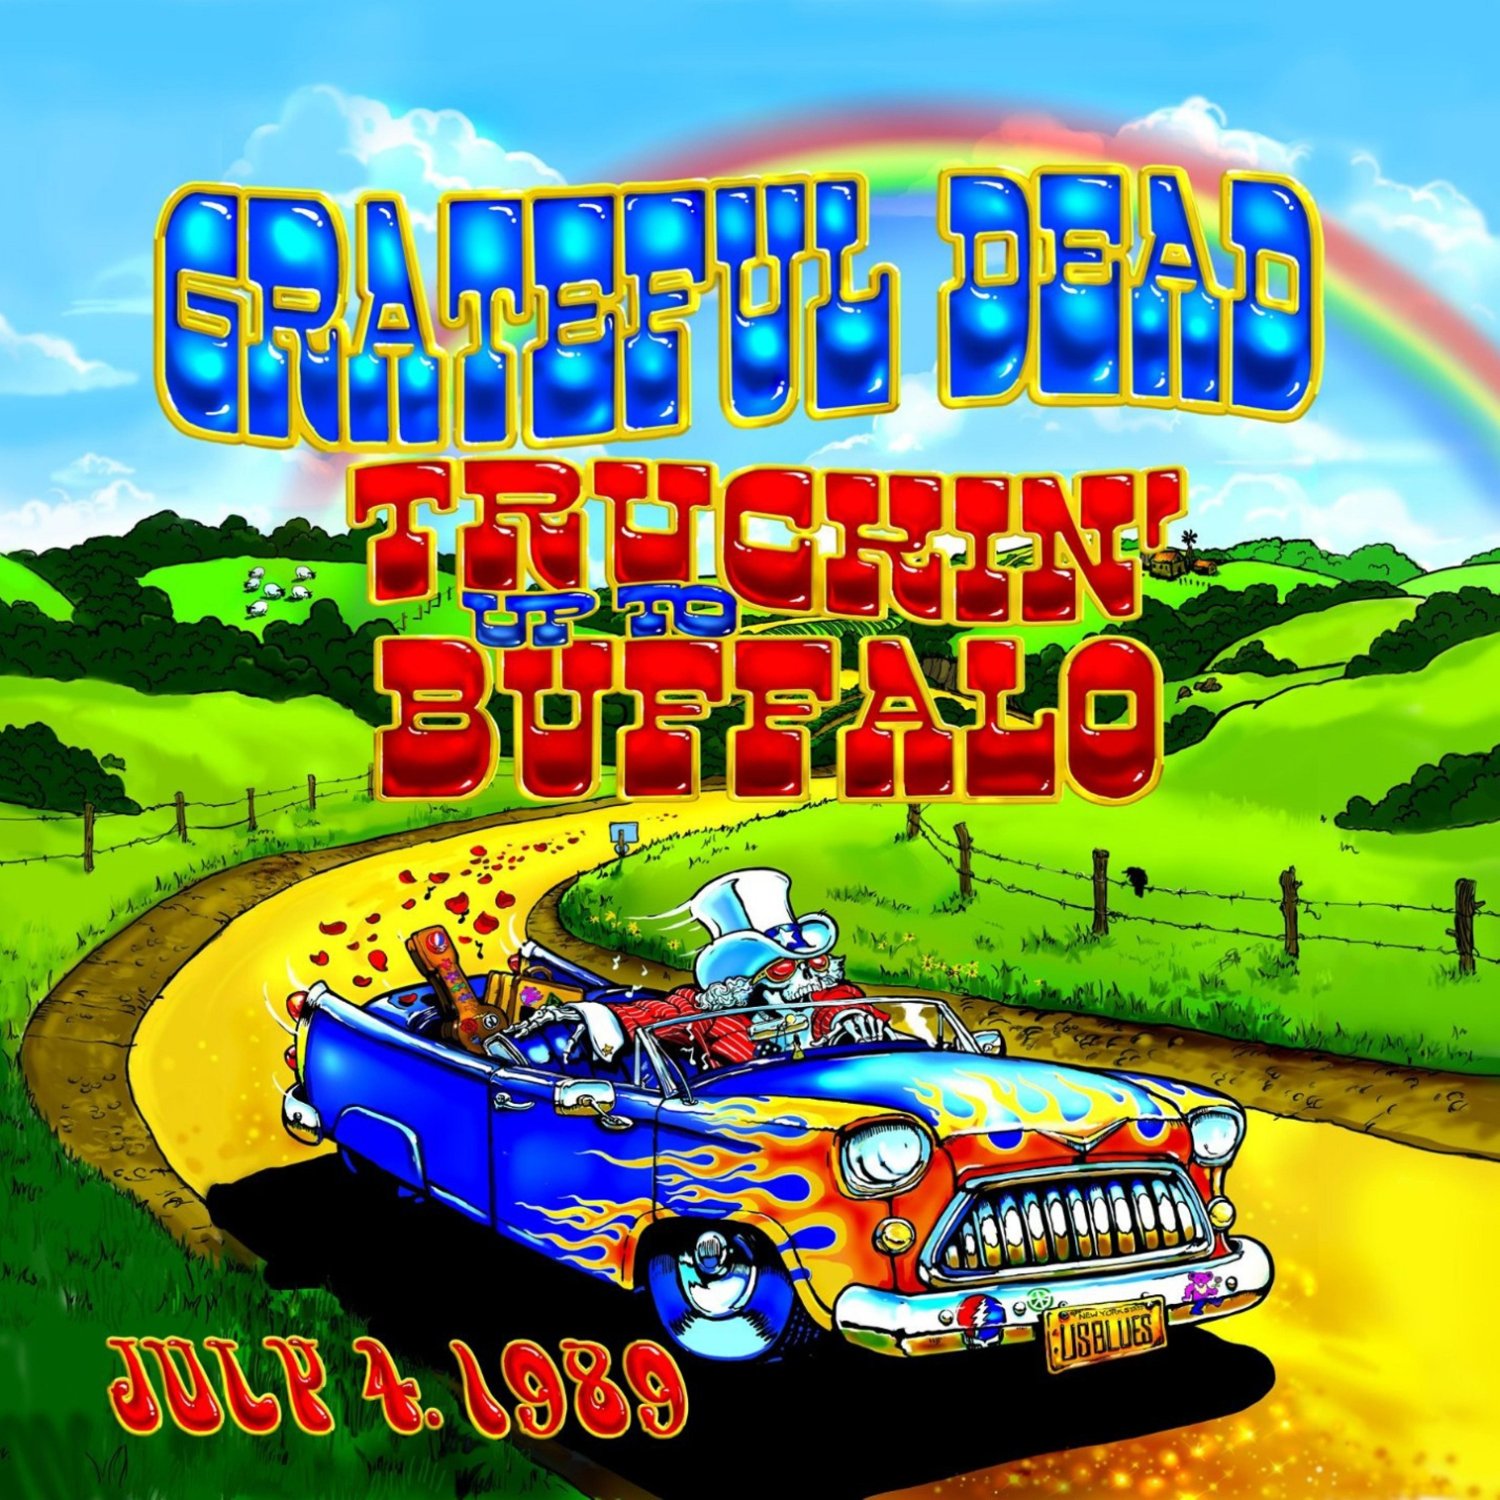 GRATEFUL DEAD Truckin' up to Buffalo BANNER Huge 4X4 Ft Fabric Poster Tapestry Flag album cover art